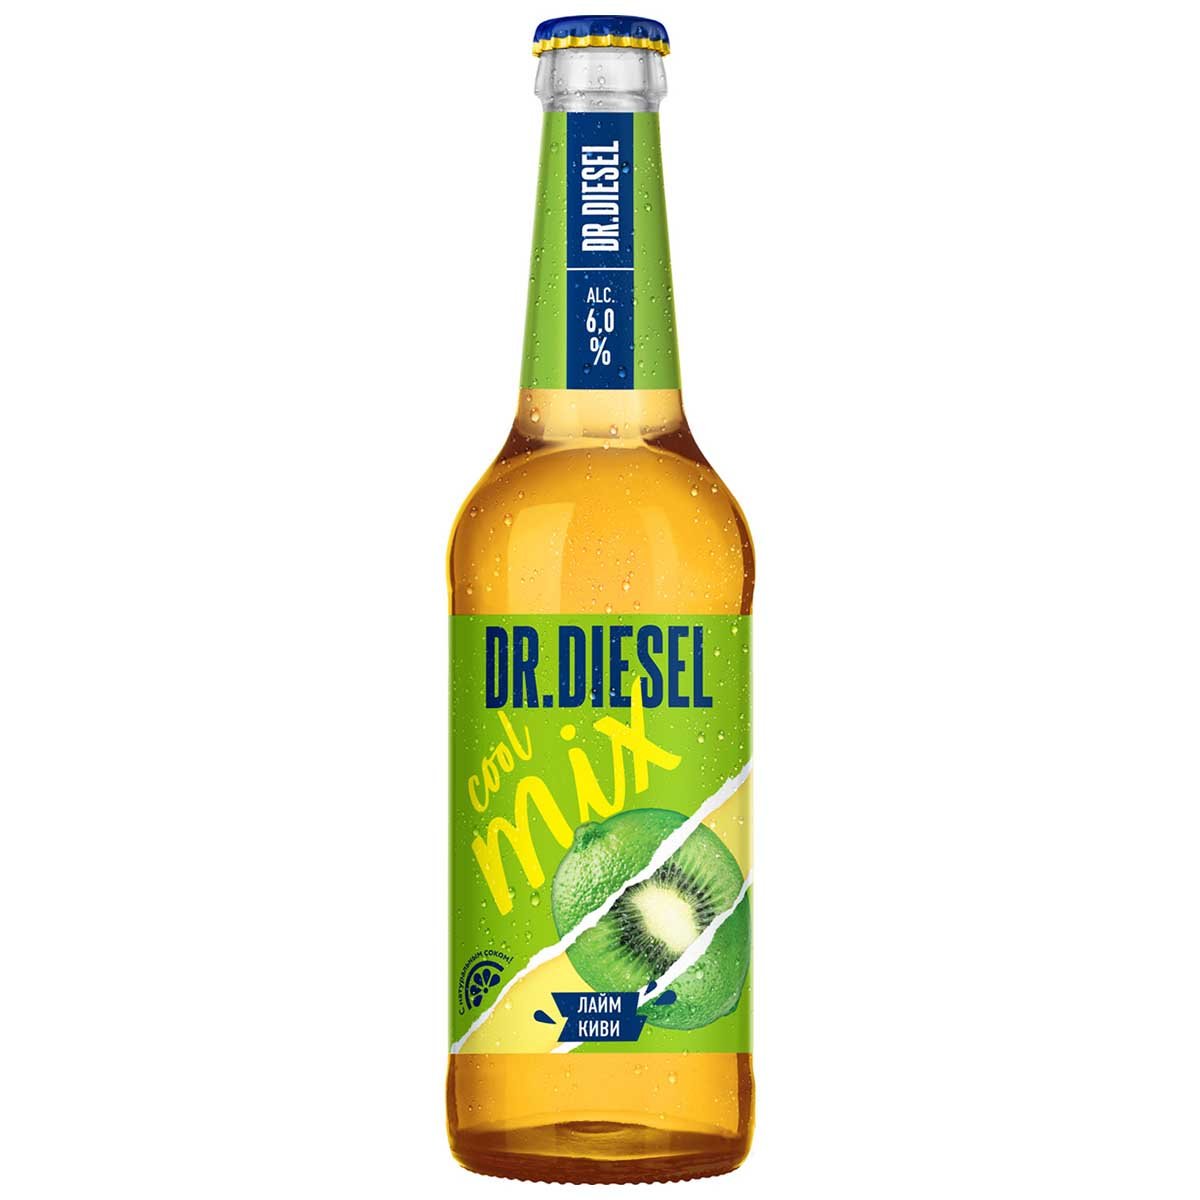 Mr diesel. Пивной напиток Dr Diesel. Dr.Diesel пиво киви лайм. Доктор дизель пиво лайм киви. Пивной напиток доктор дизель лайм и киви.